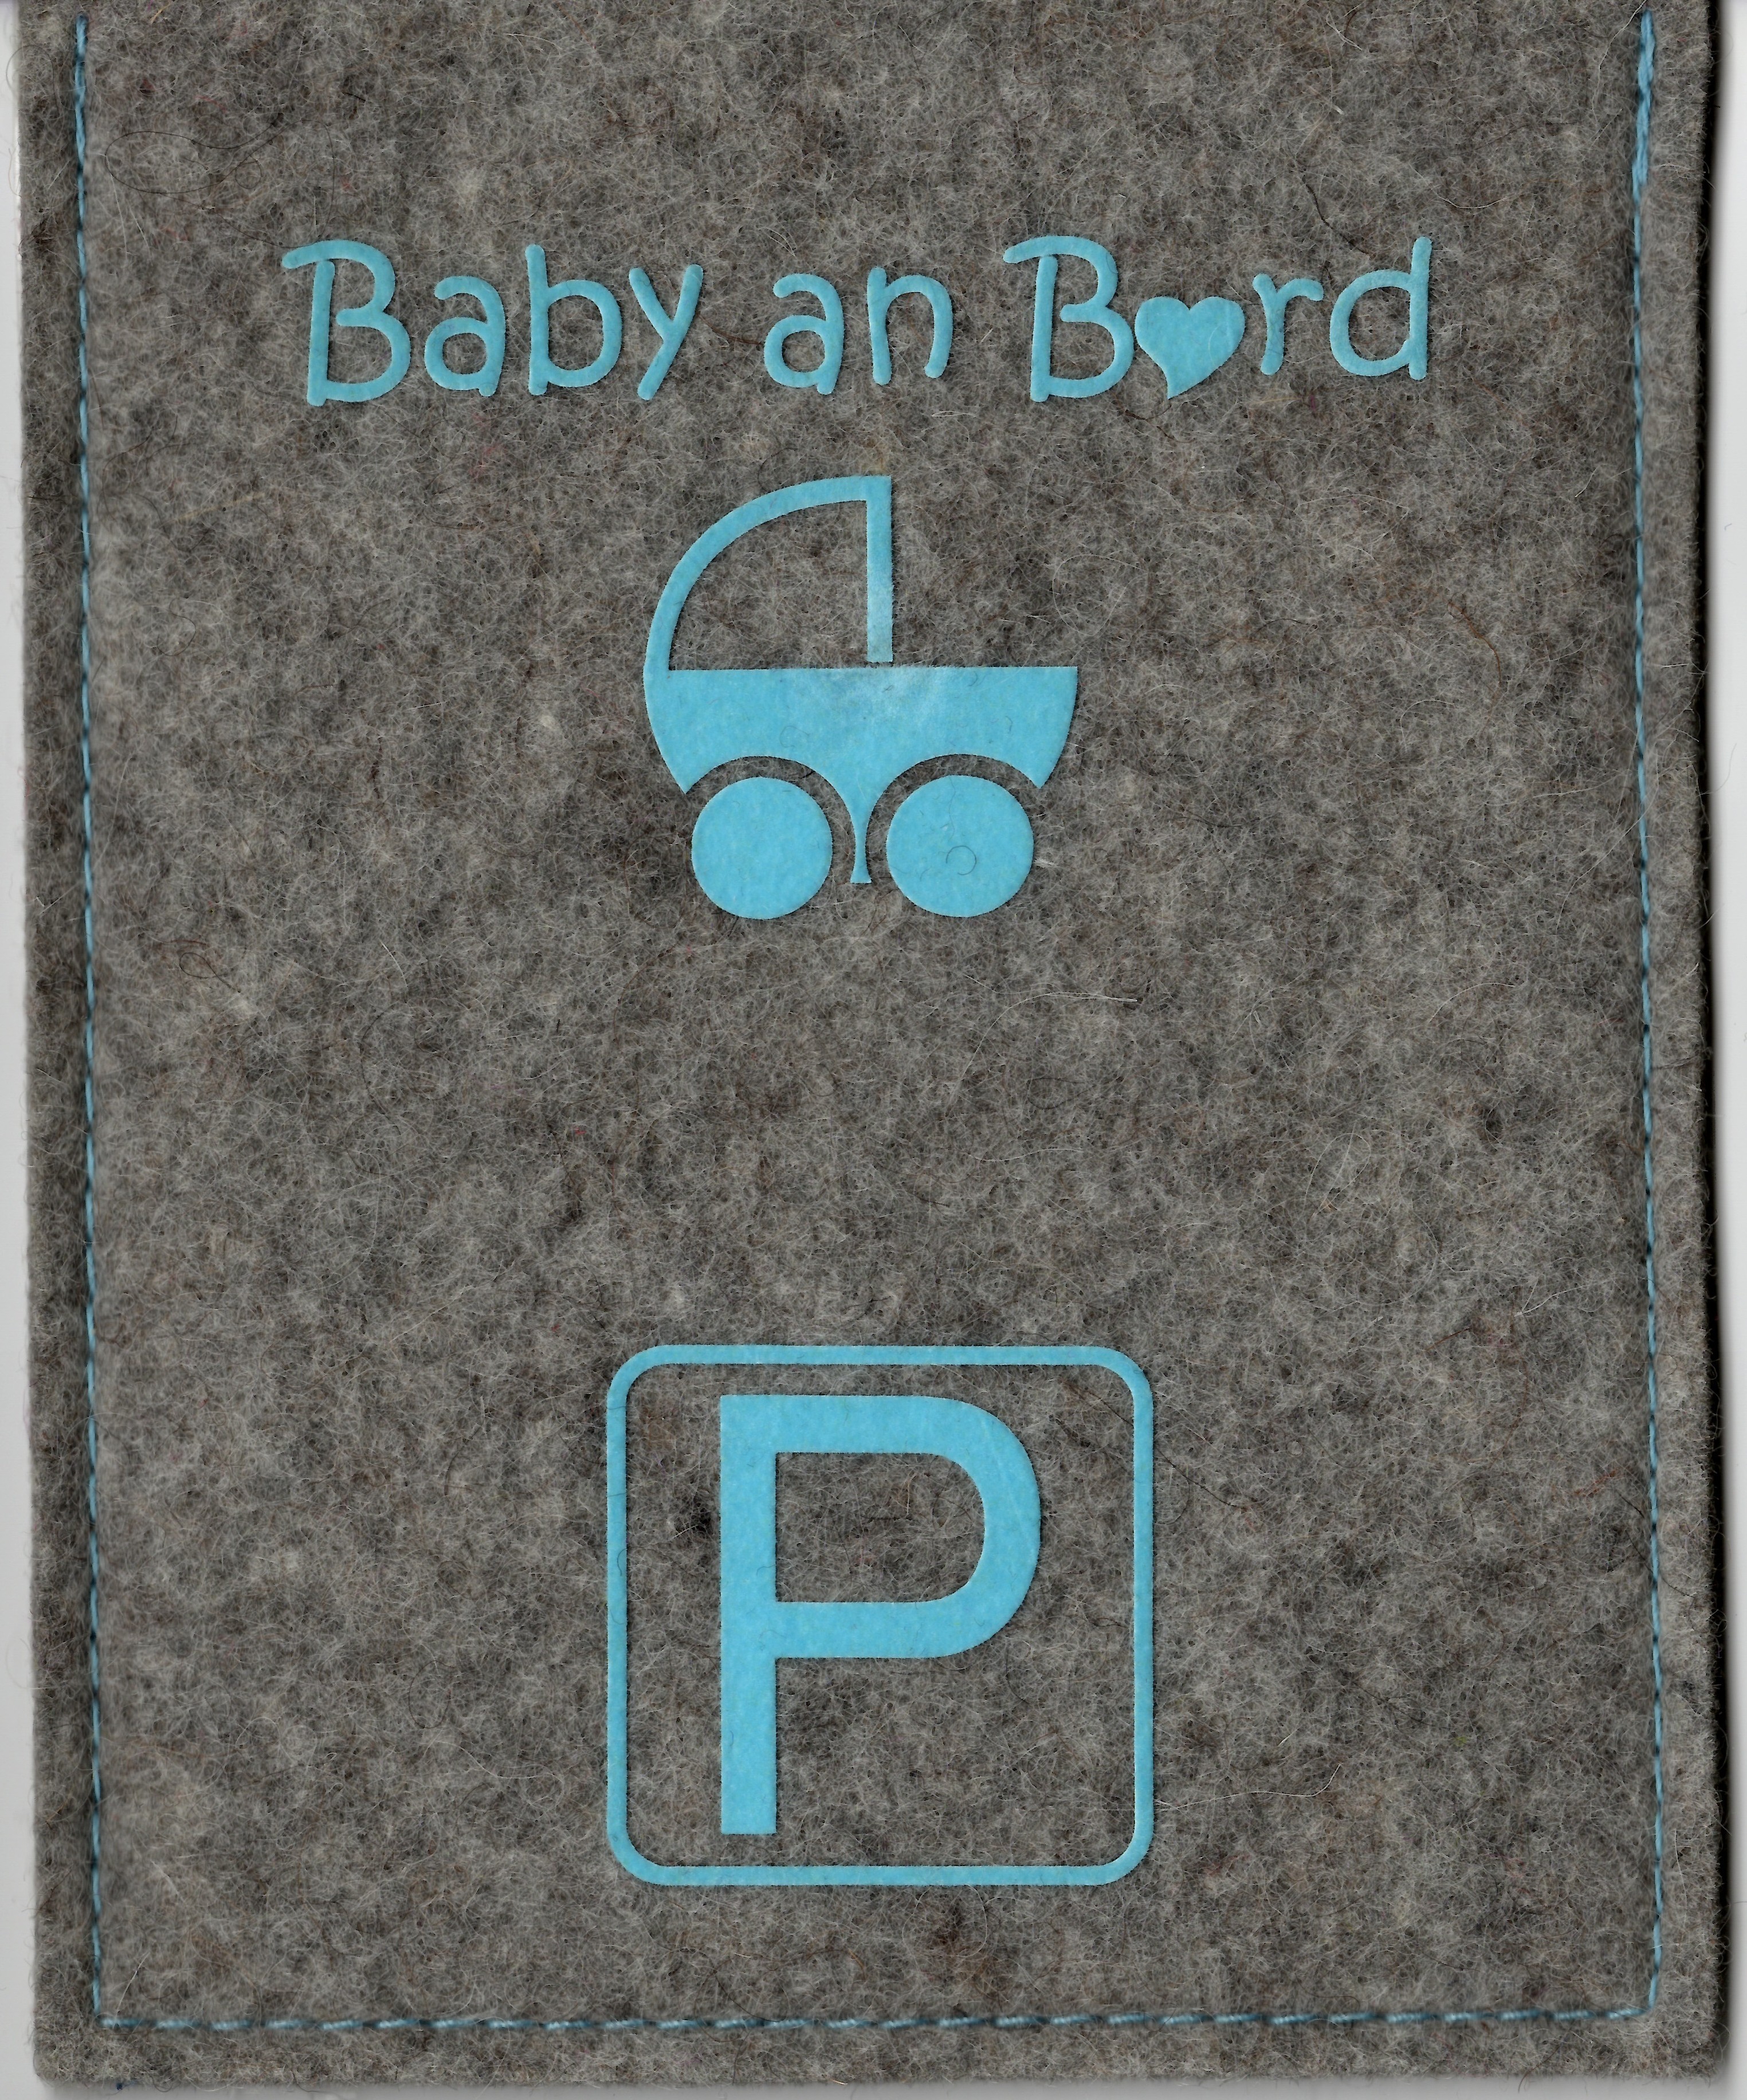 Parkscheibe / Parkkarte blaue Zone - Baby an Board - grau / blau PR